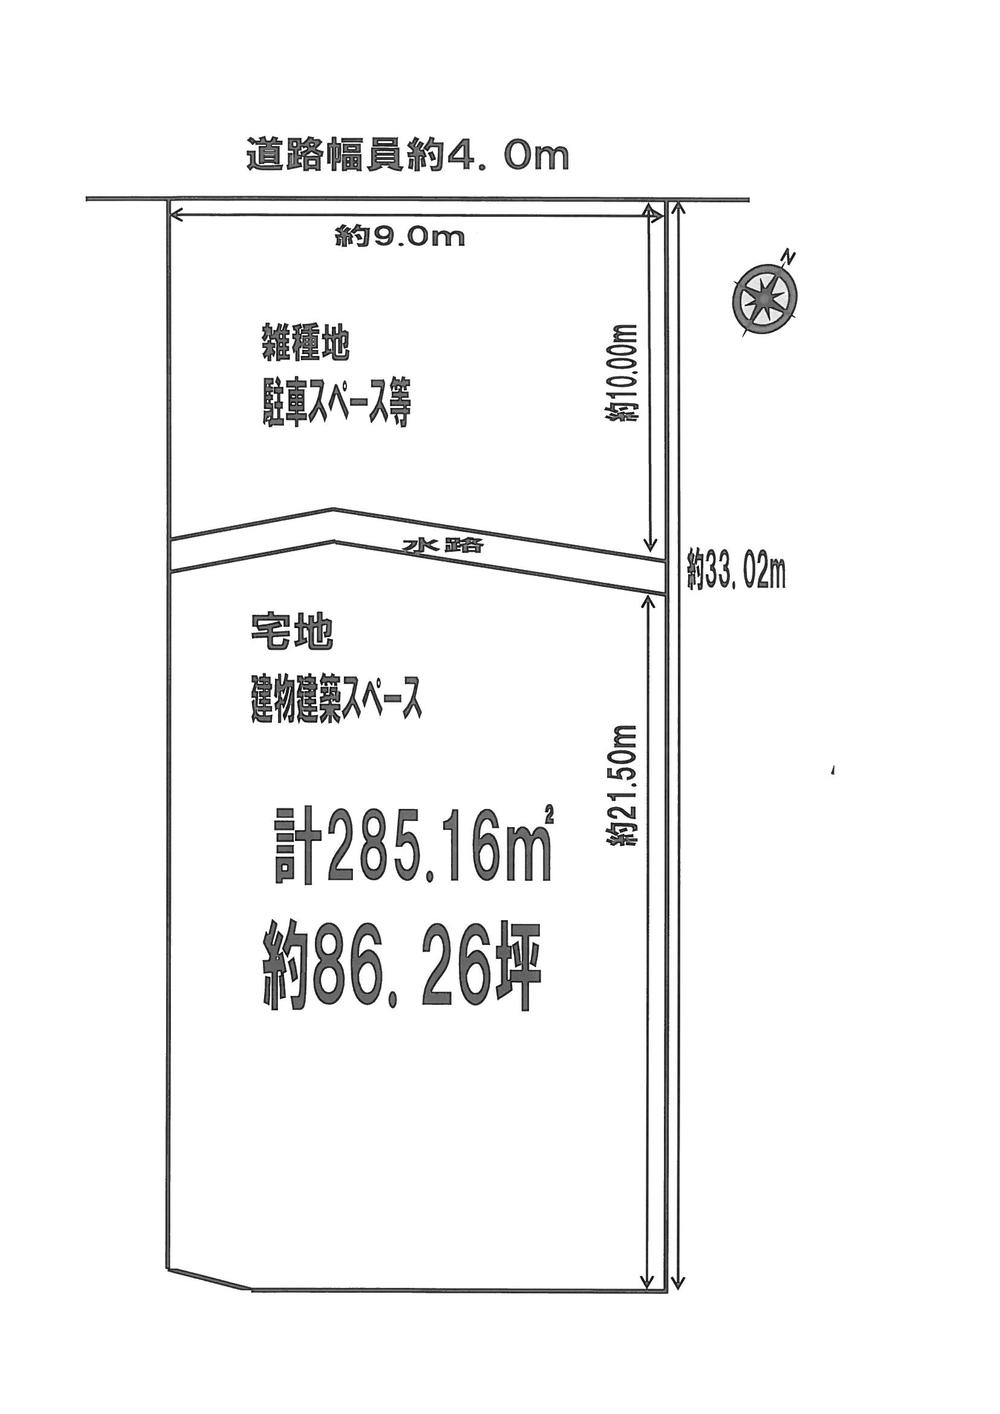 Compartment figure. Land price 23.8 million yen, Land area 285.16 sq m